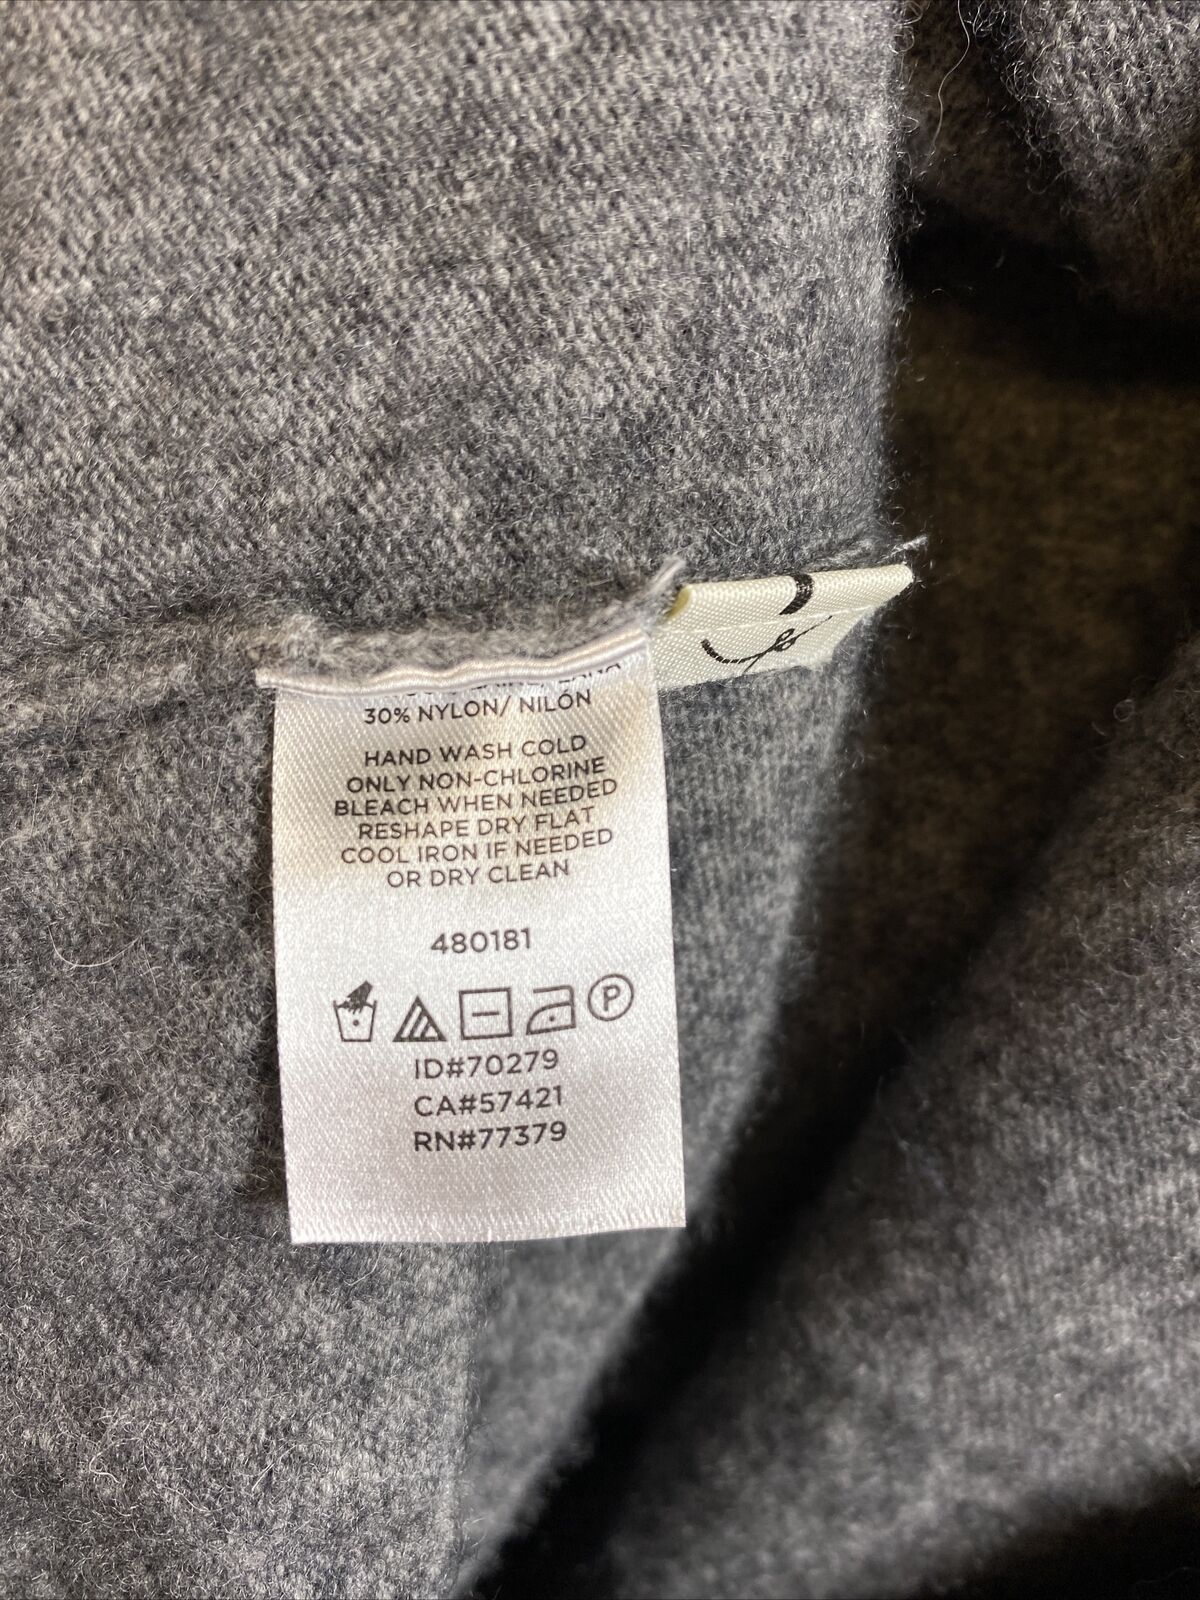 Ann Taylor Women's Gray Wool Blend Midi Button Up Cardigan Sweater - LP